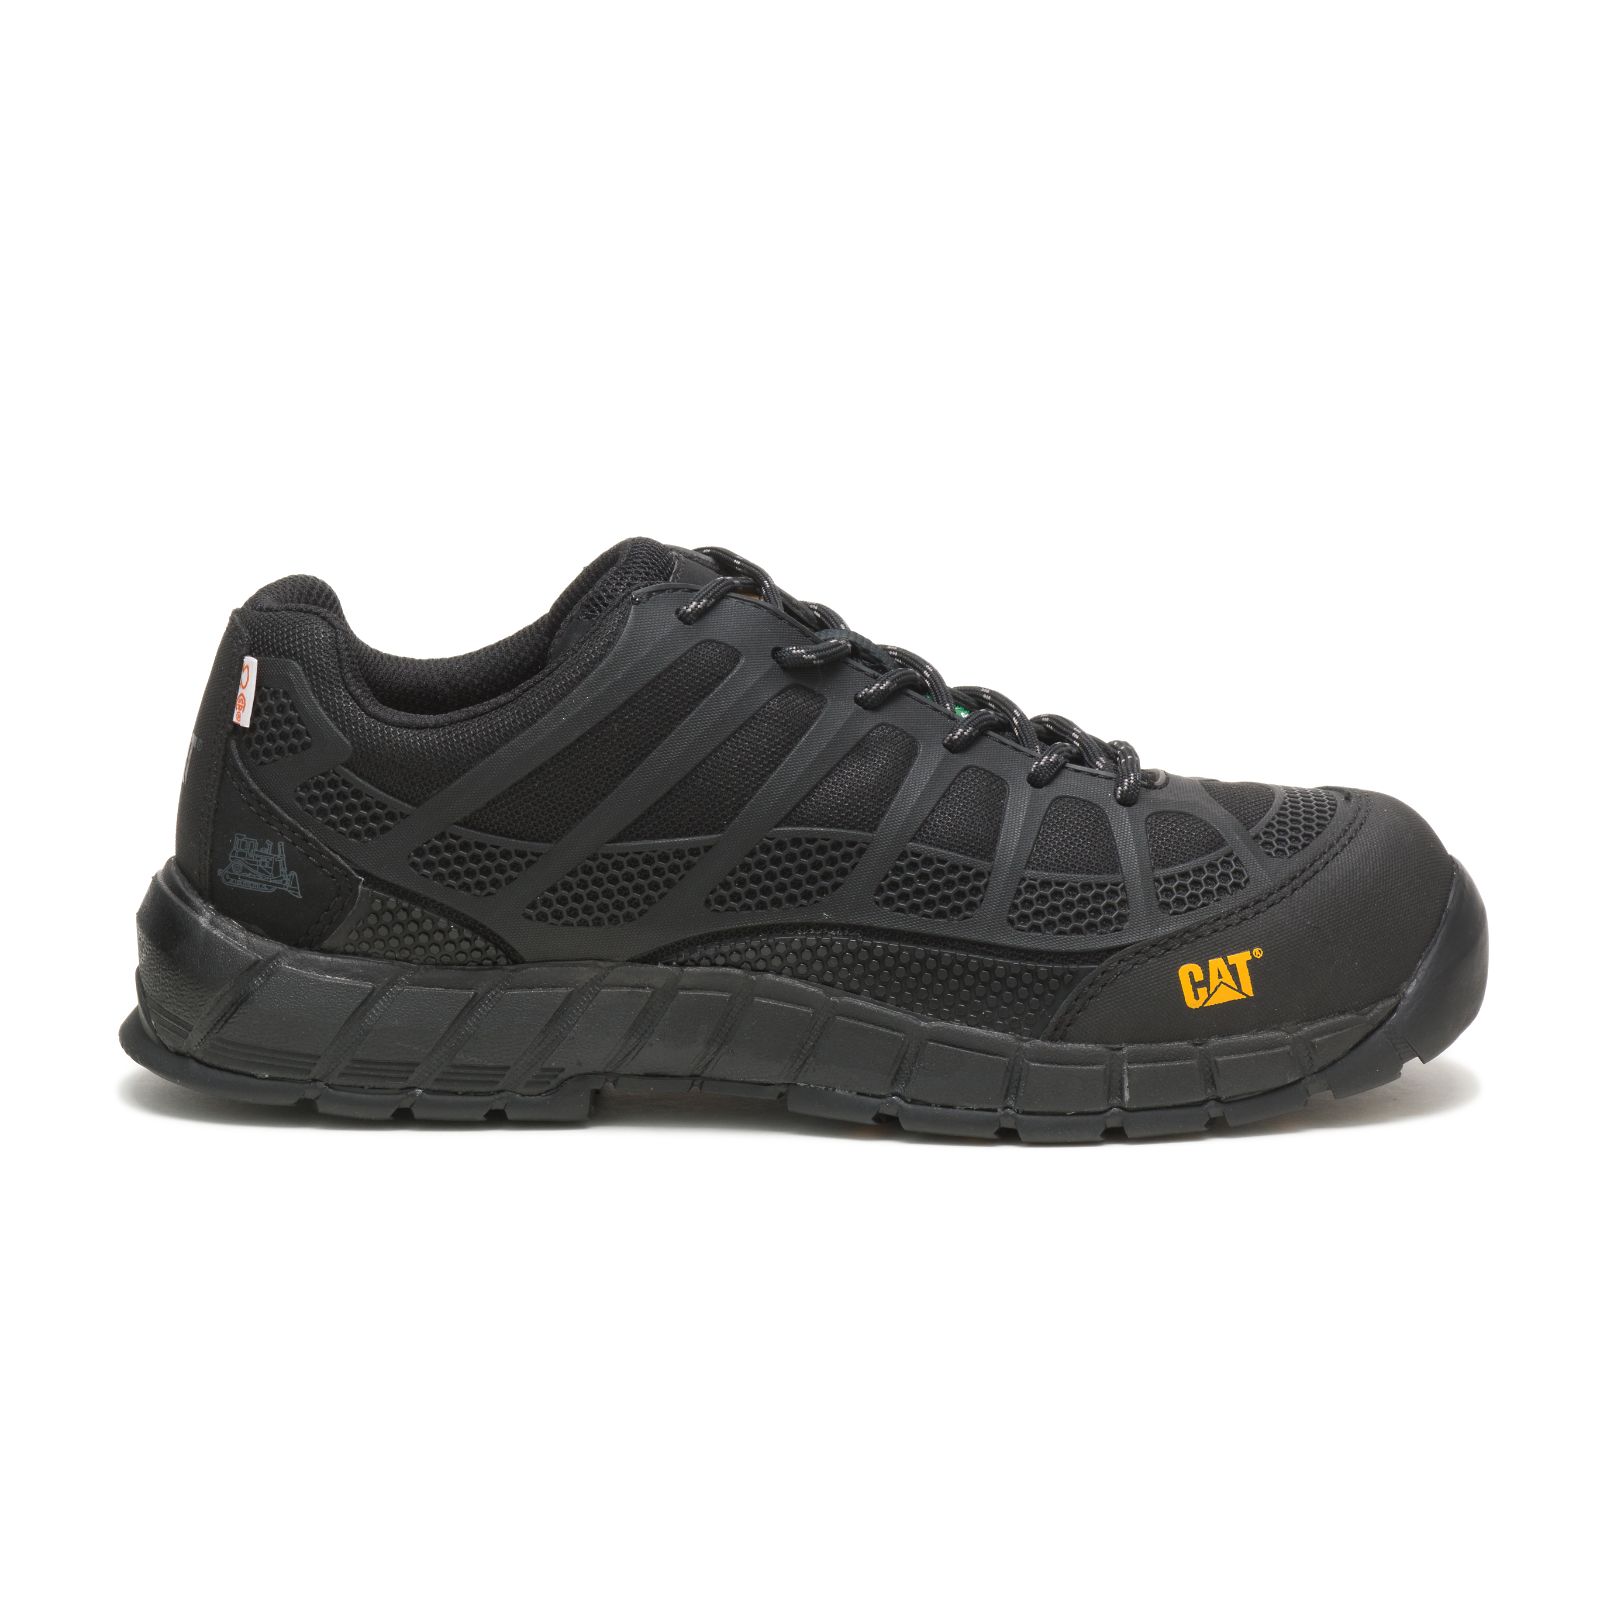 Caterpillar Shoes Lahore - Caterpillar Streamline Csa Shoe (Composite Toe, Non Metallic) Mens Work Shoes Black (893724-KUS)